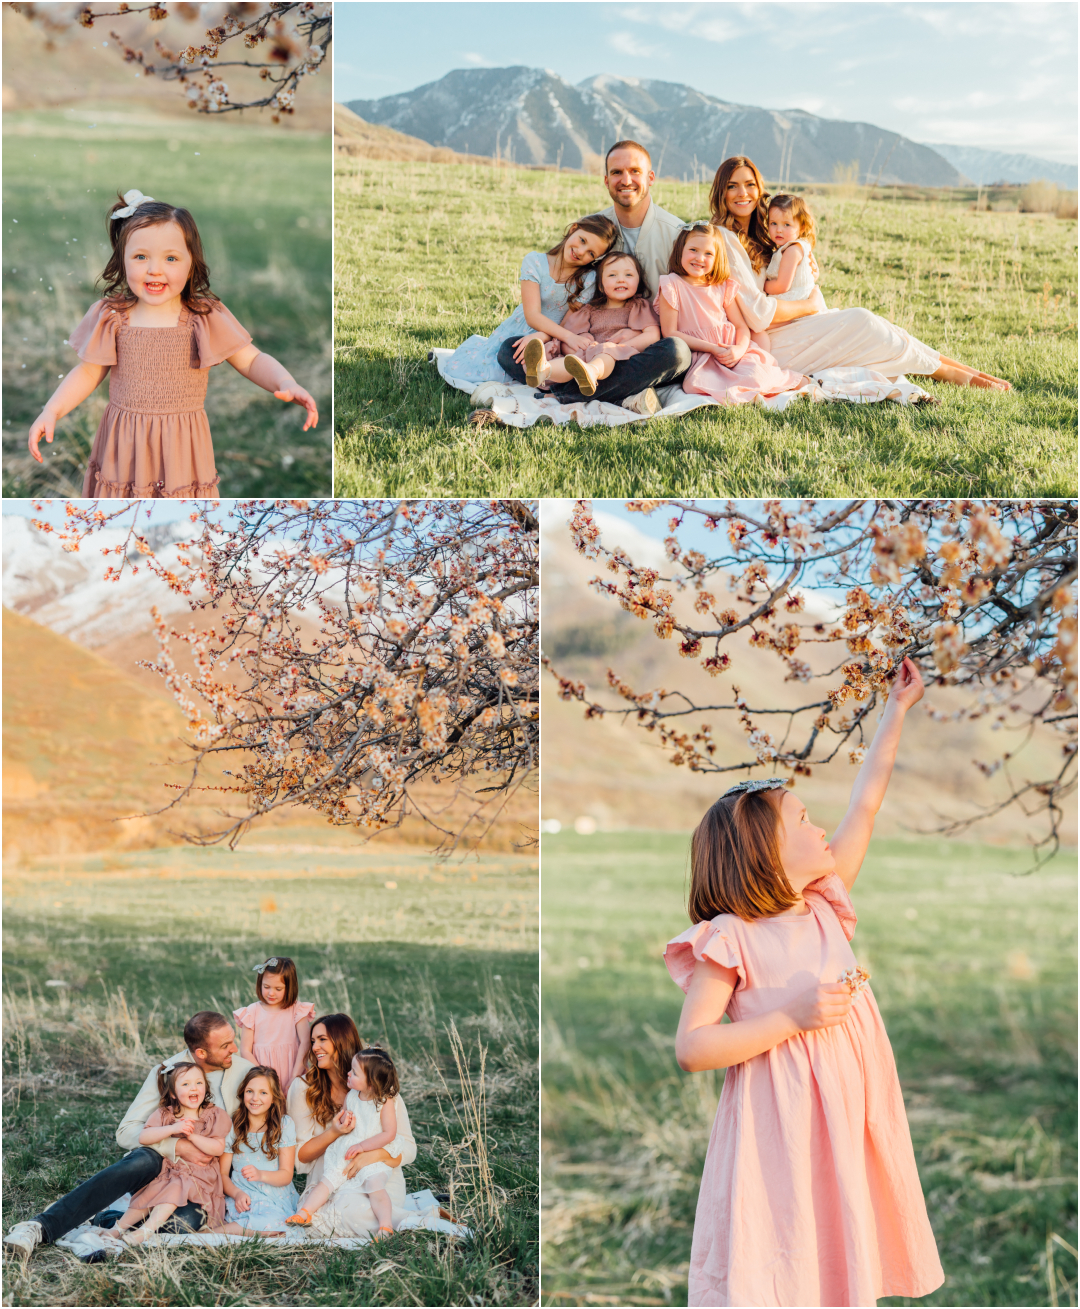 Utah Spring Family Photography Locations in Utah County - Mapleton